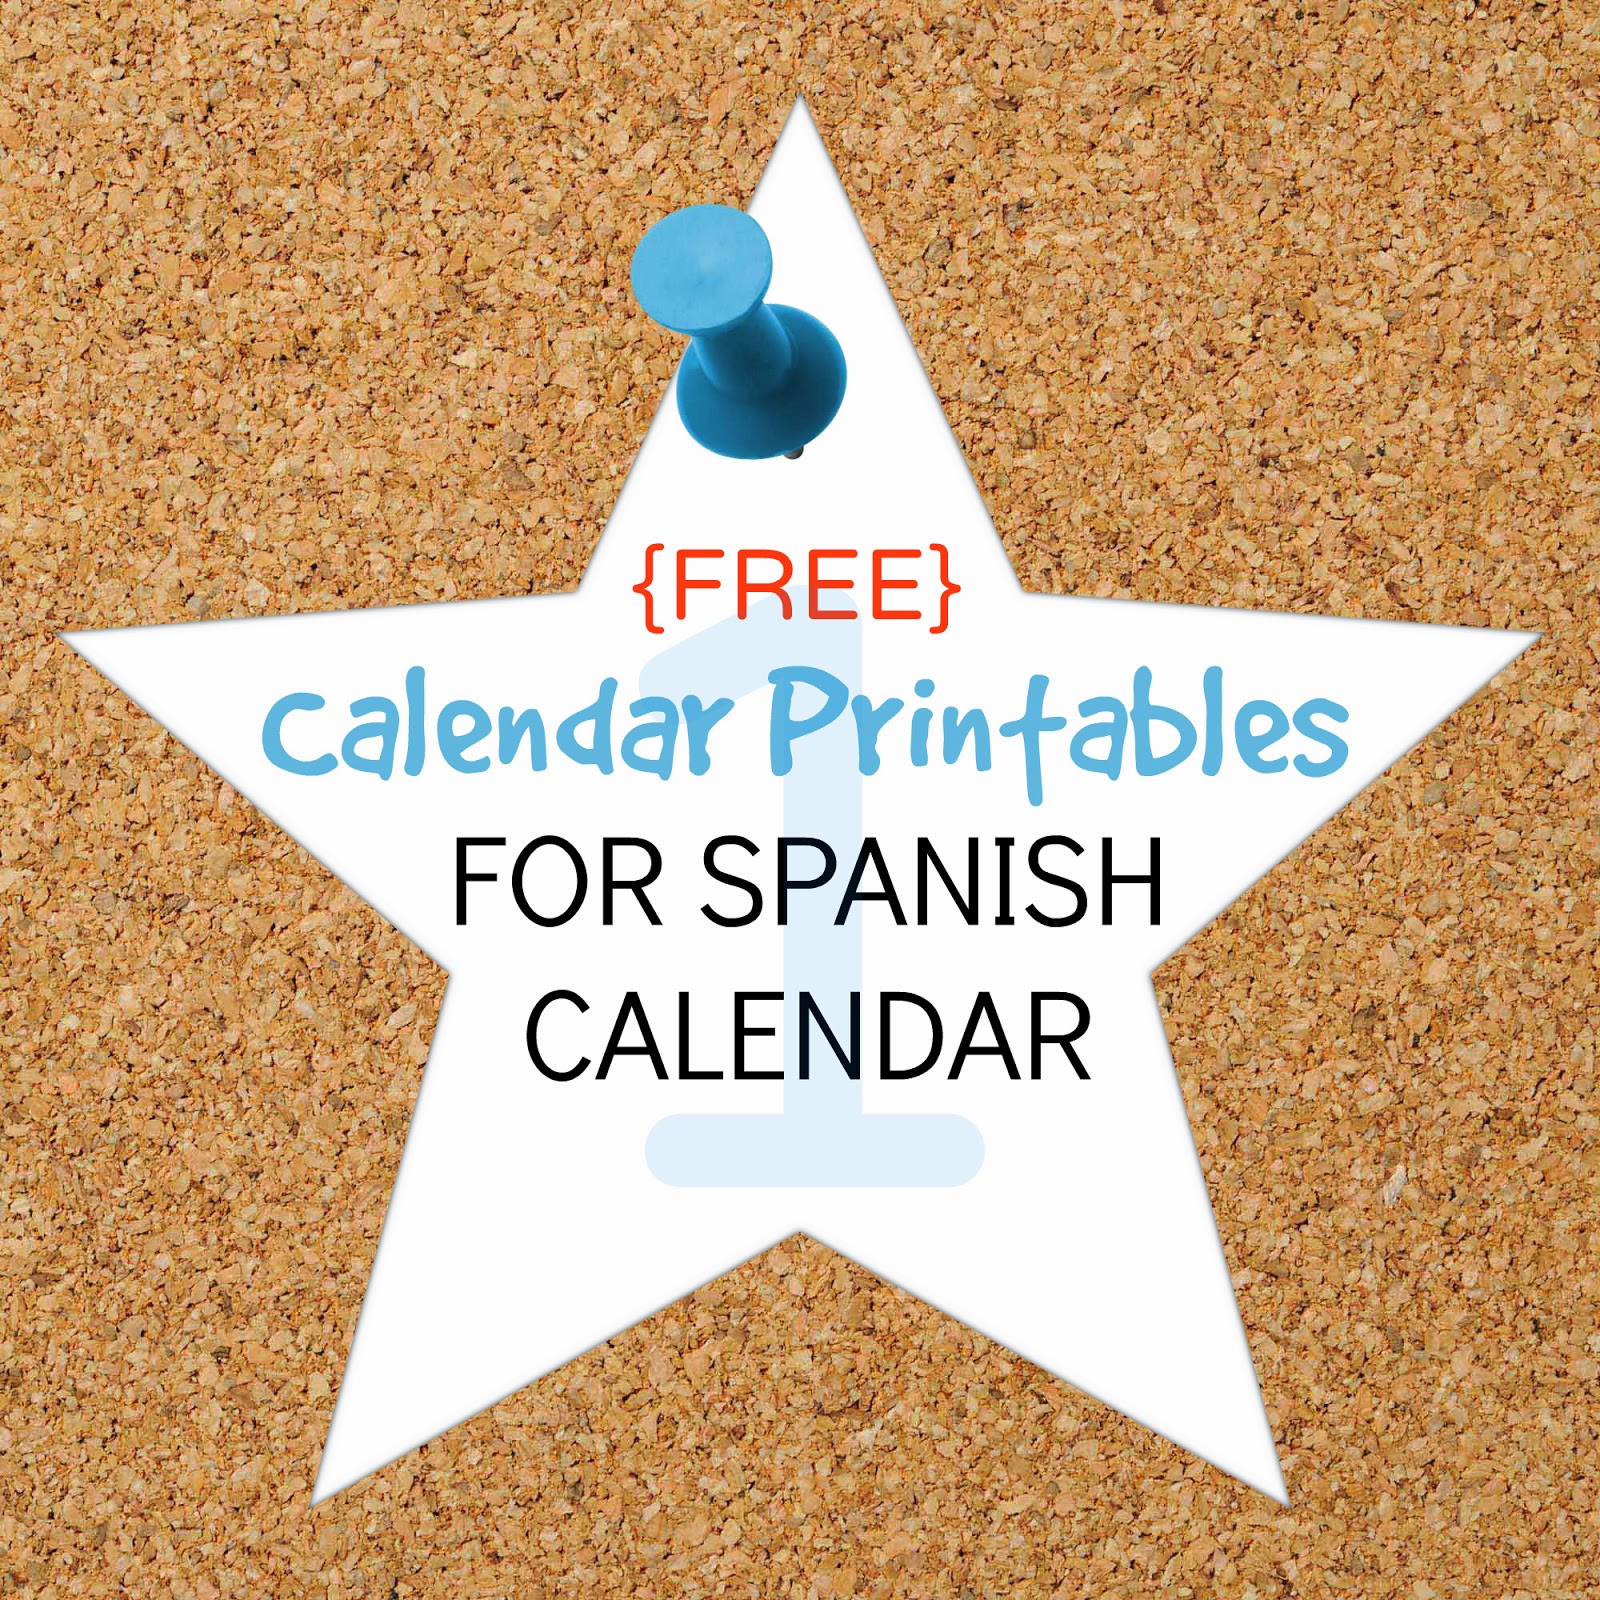 FREE Calendar Printables septiembre-mayo